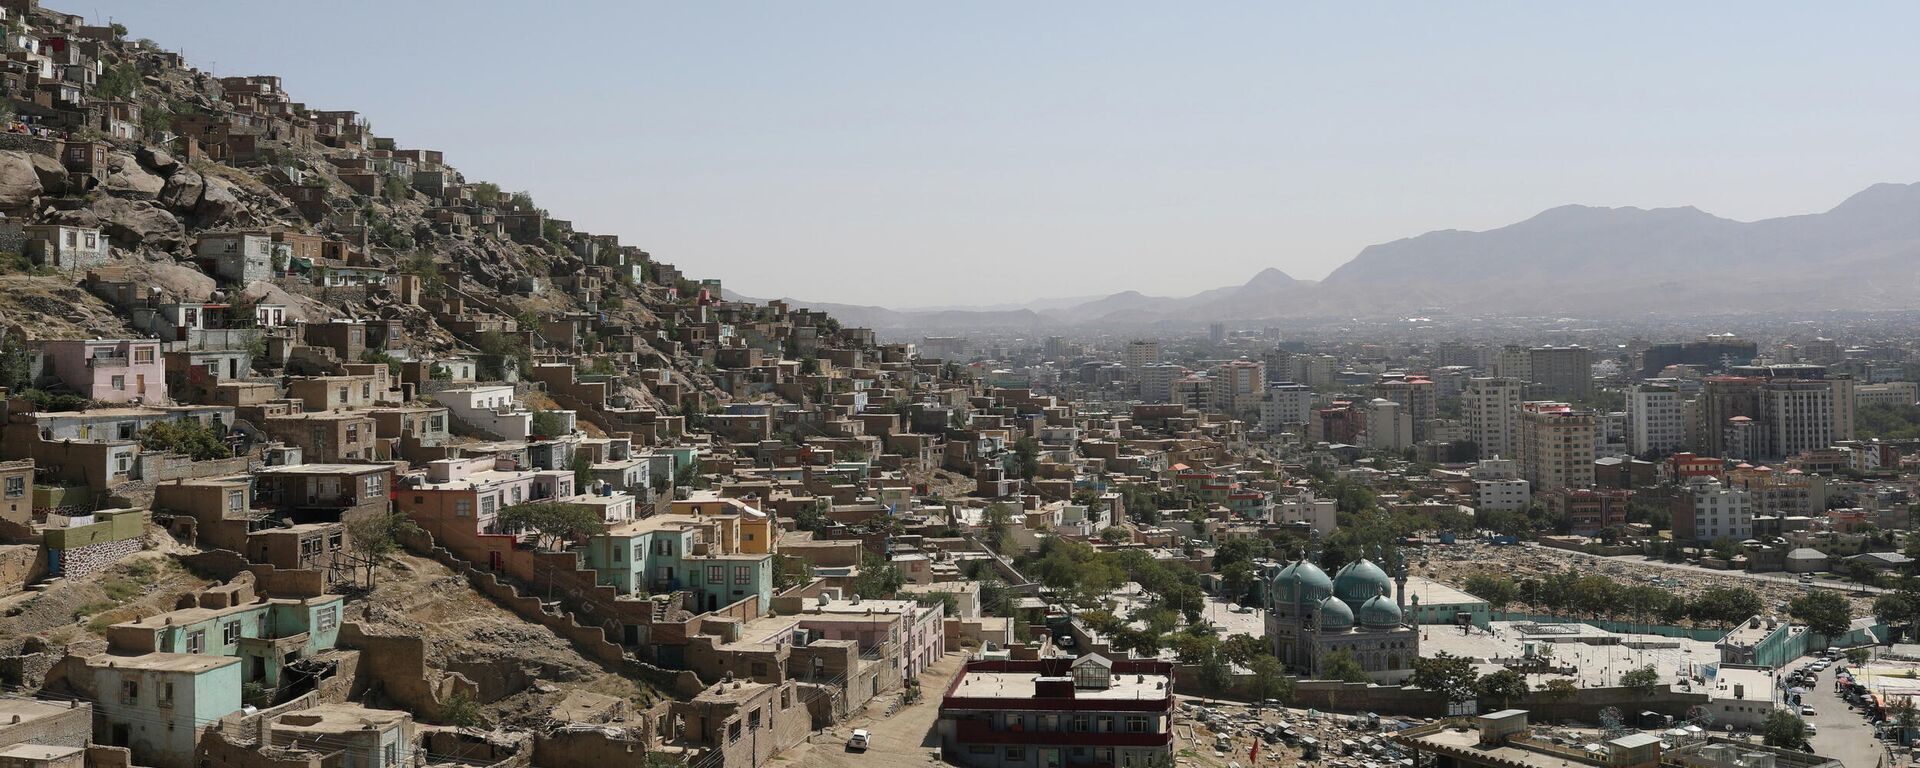 A general view of the city of Kabul - Sputnik International, 1920, 16.09.2021